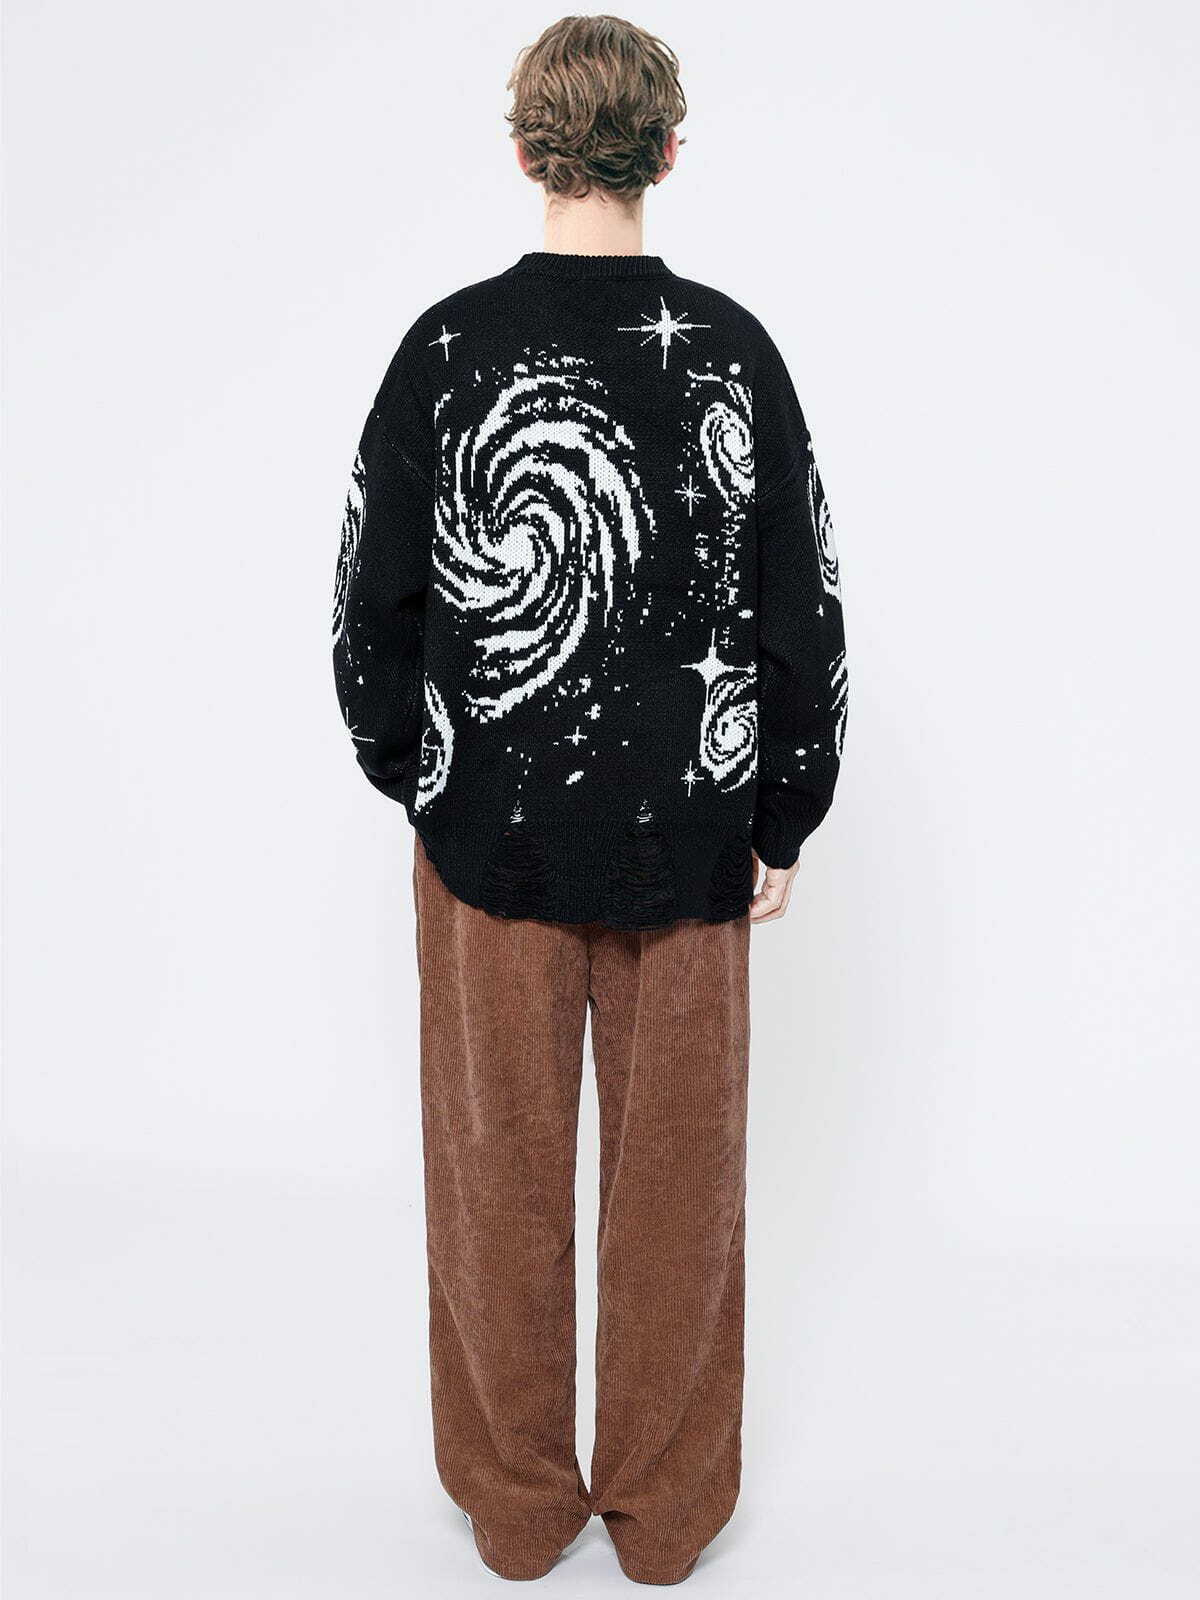 starry night jacquard knit sweater edgy urban streetwear chic 8475